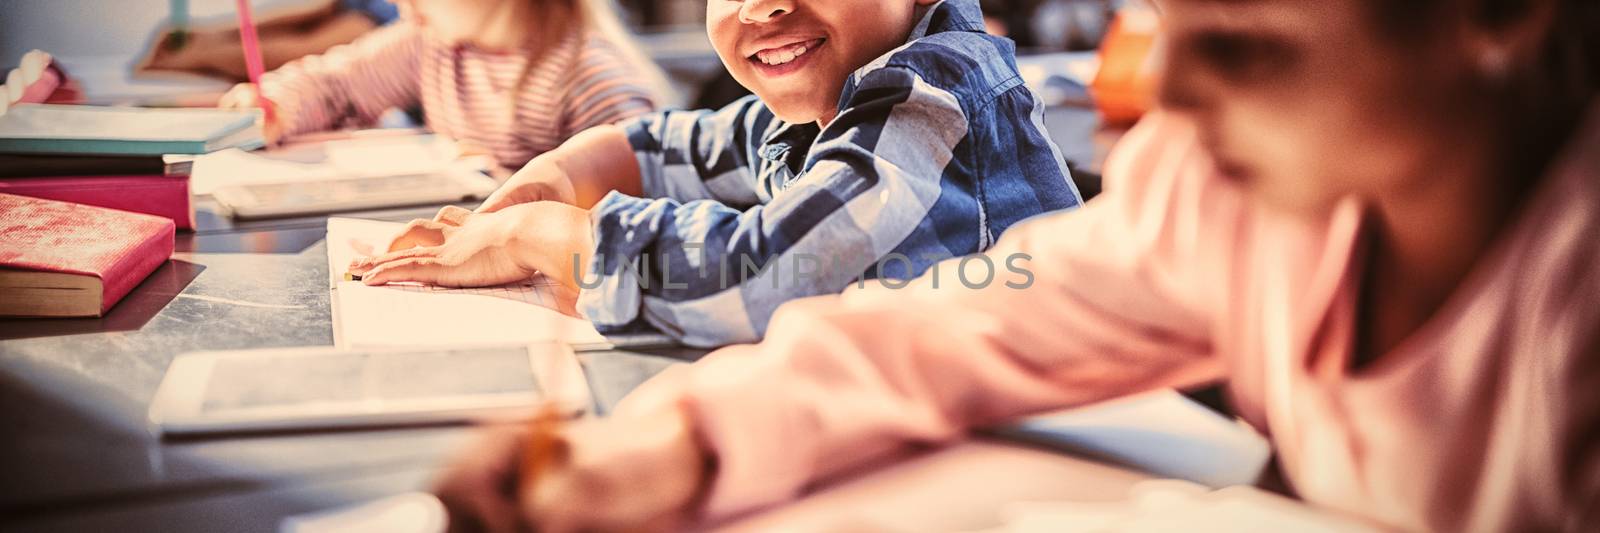 Portrait of smiling schoolboy doing his homework in classroom by Wavebreakmedia